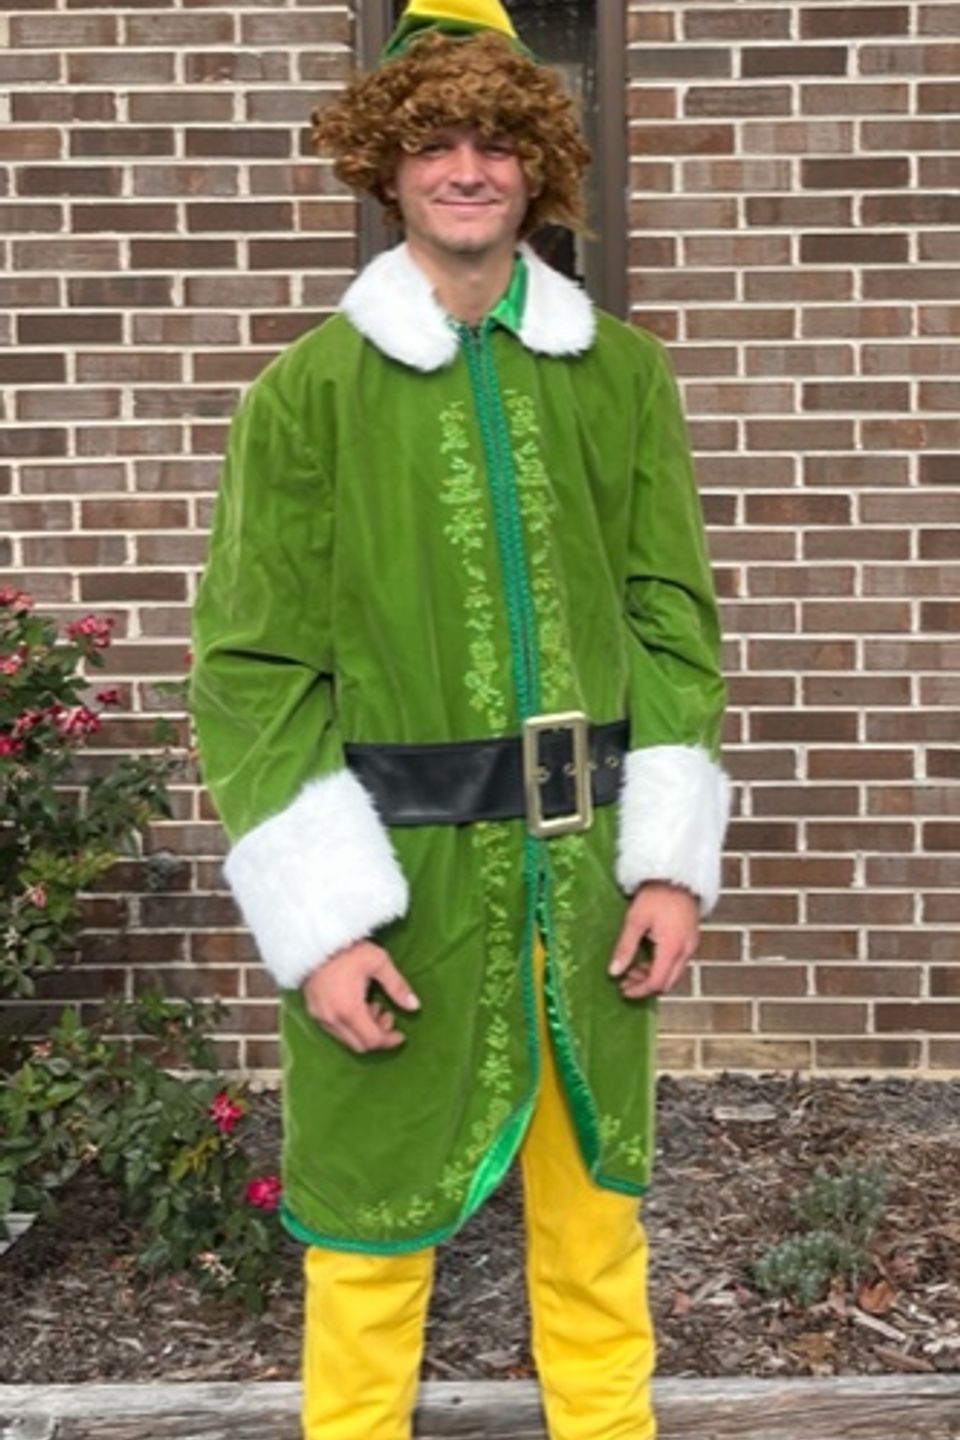 Buddy the elf